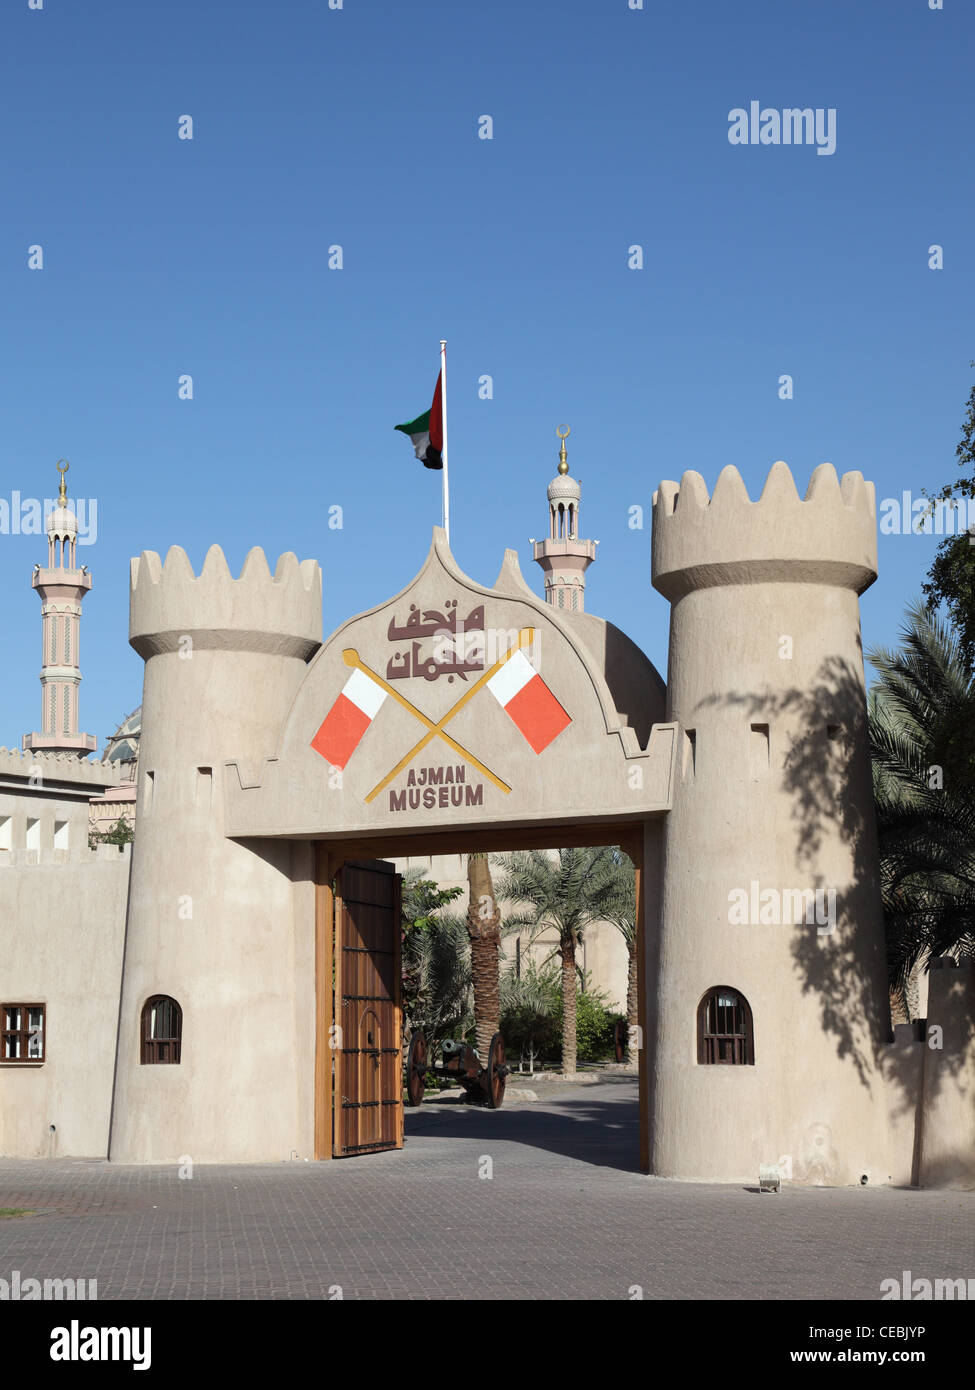 El museo de Ajman, Emiratos Arabes Unidos Foto de stock